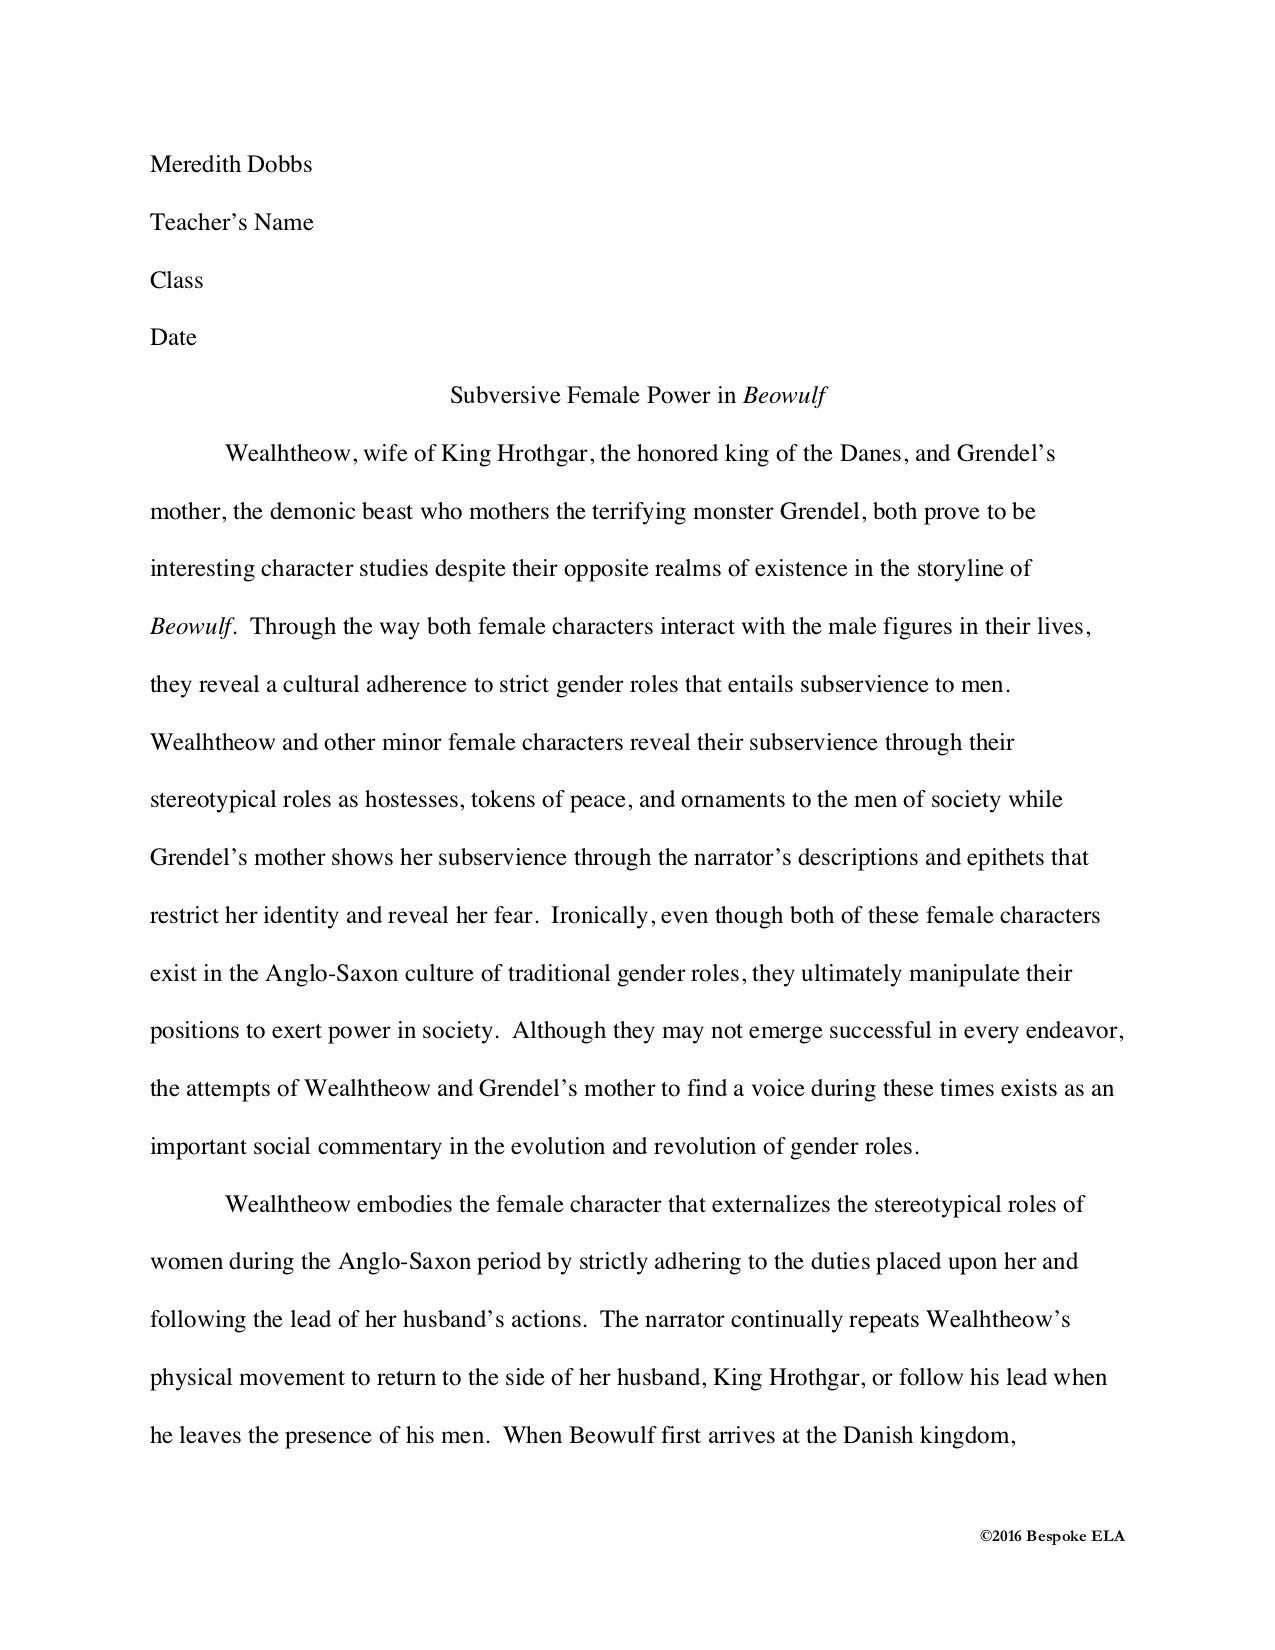 textual analysis essay example